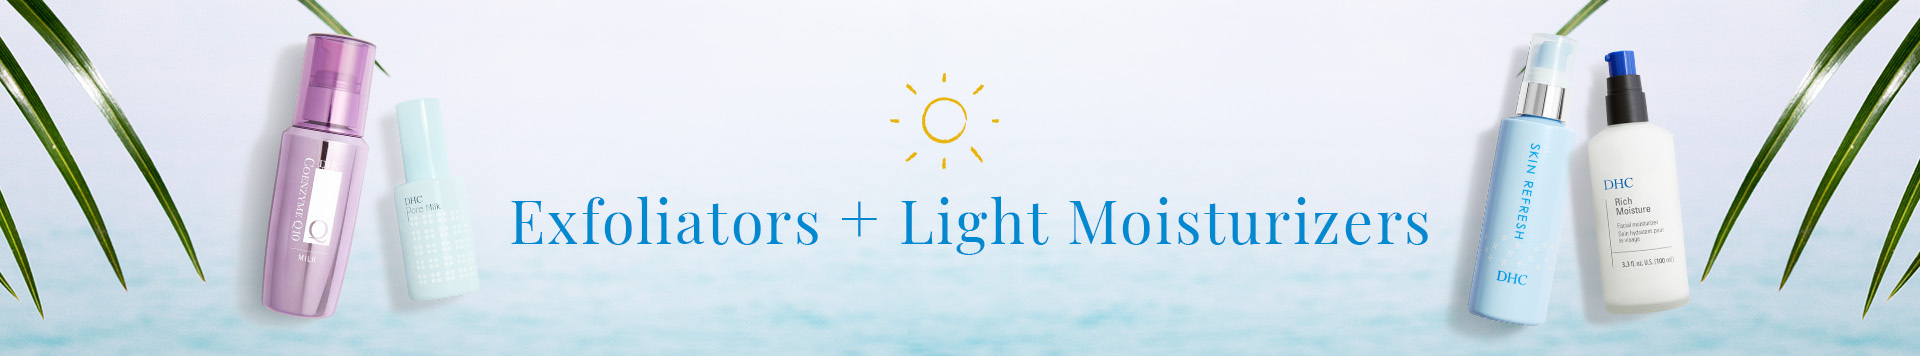 Exfoliators + Light Moisturizers